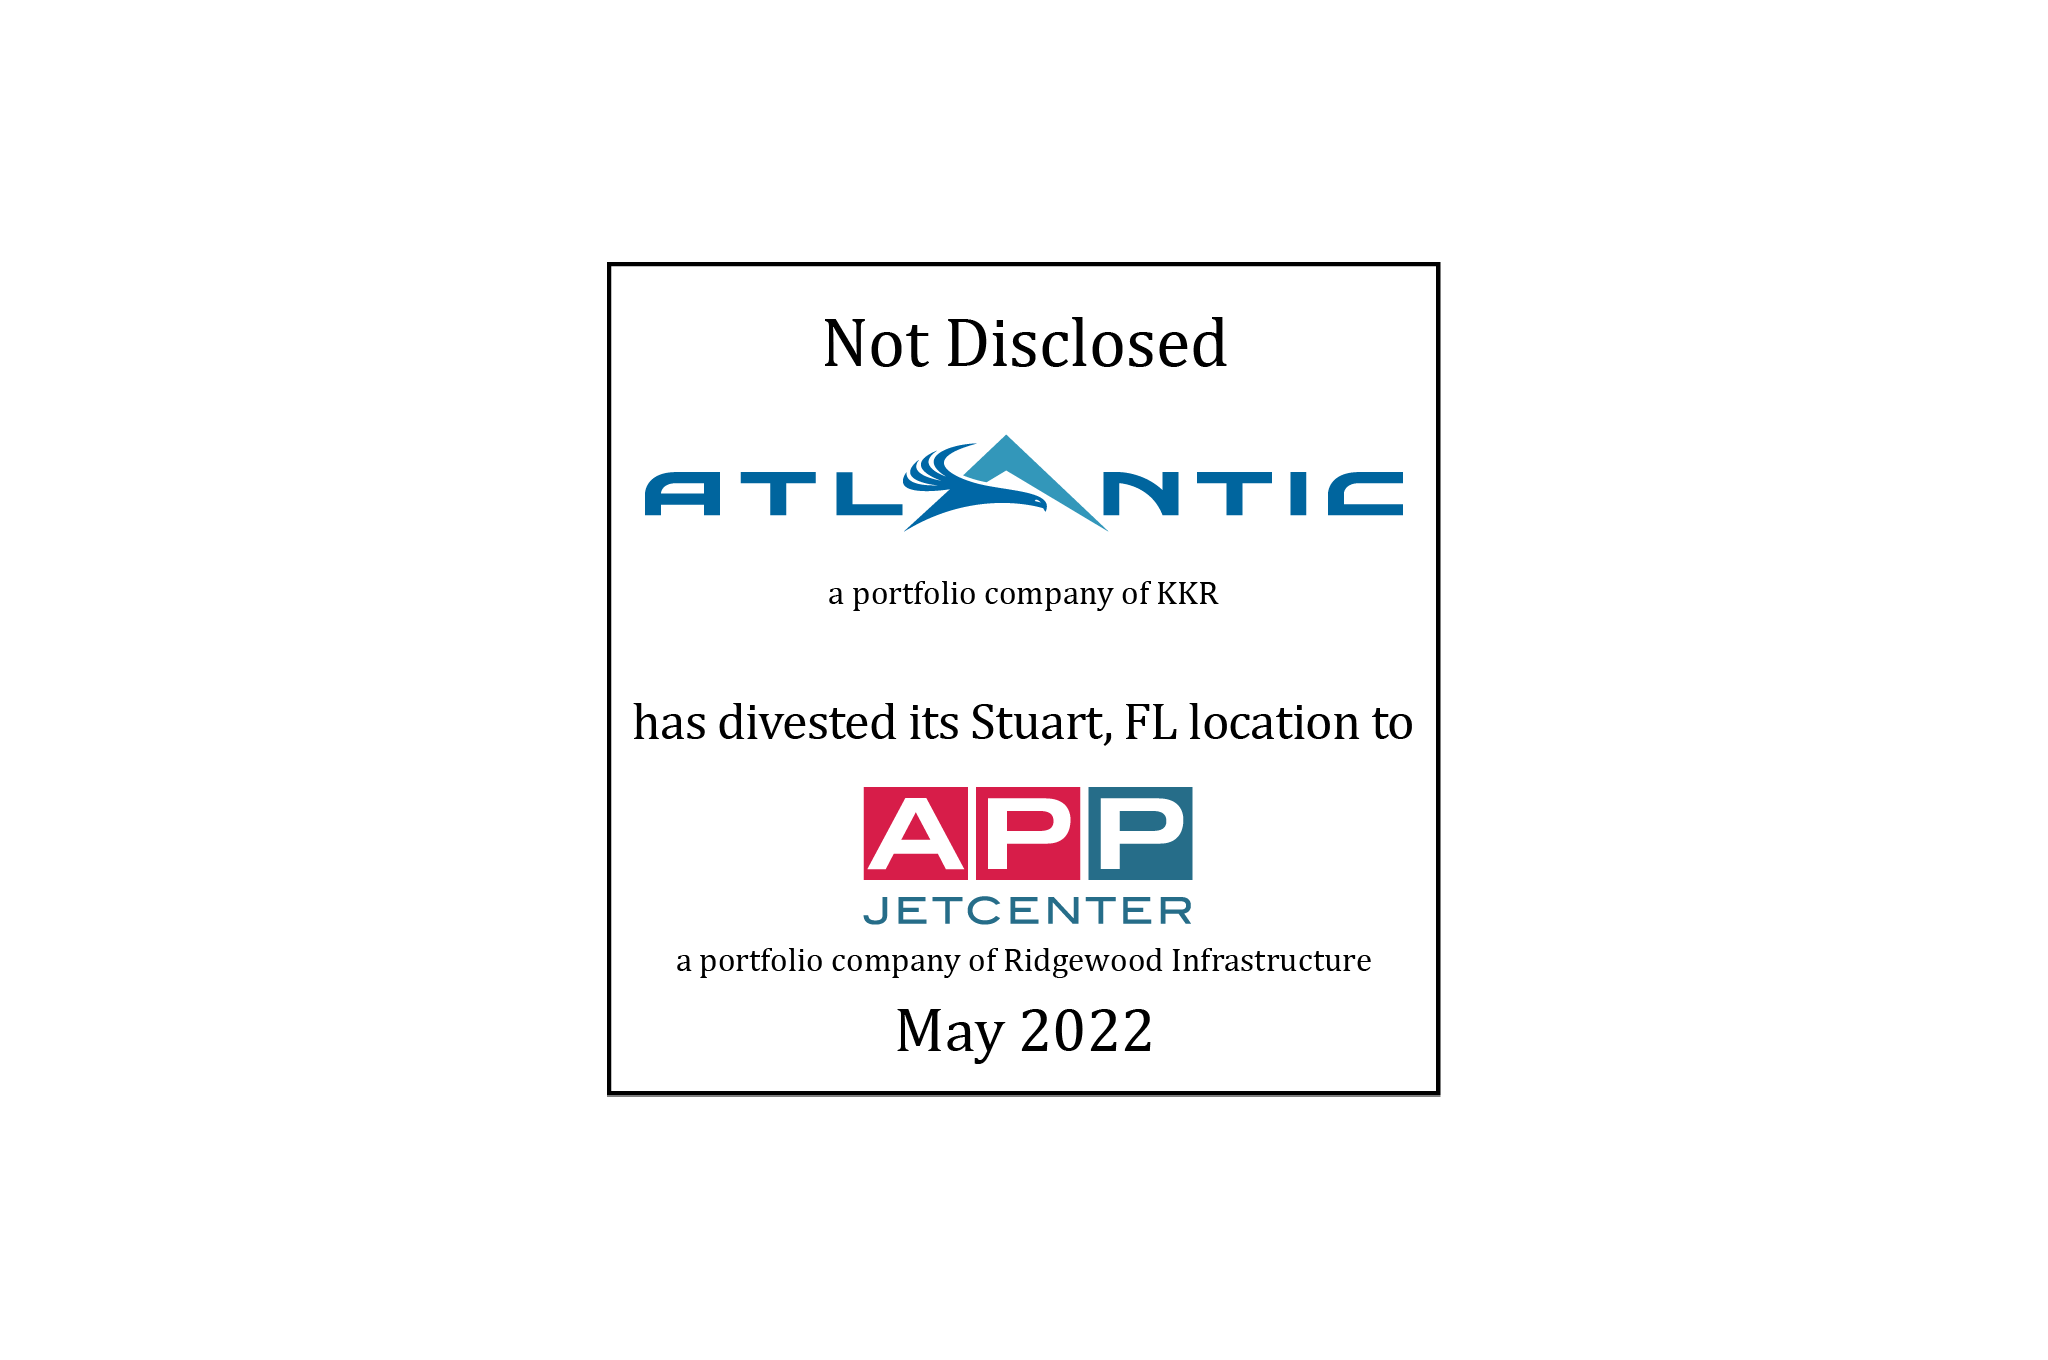 Tombstone: Atlantic (logo), a portfolio company of KKR, has divested its Stuart, FL location to APP Jetcenter (logo), a portfolio company of Ridgewood Infrastructure. May 2022